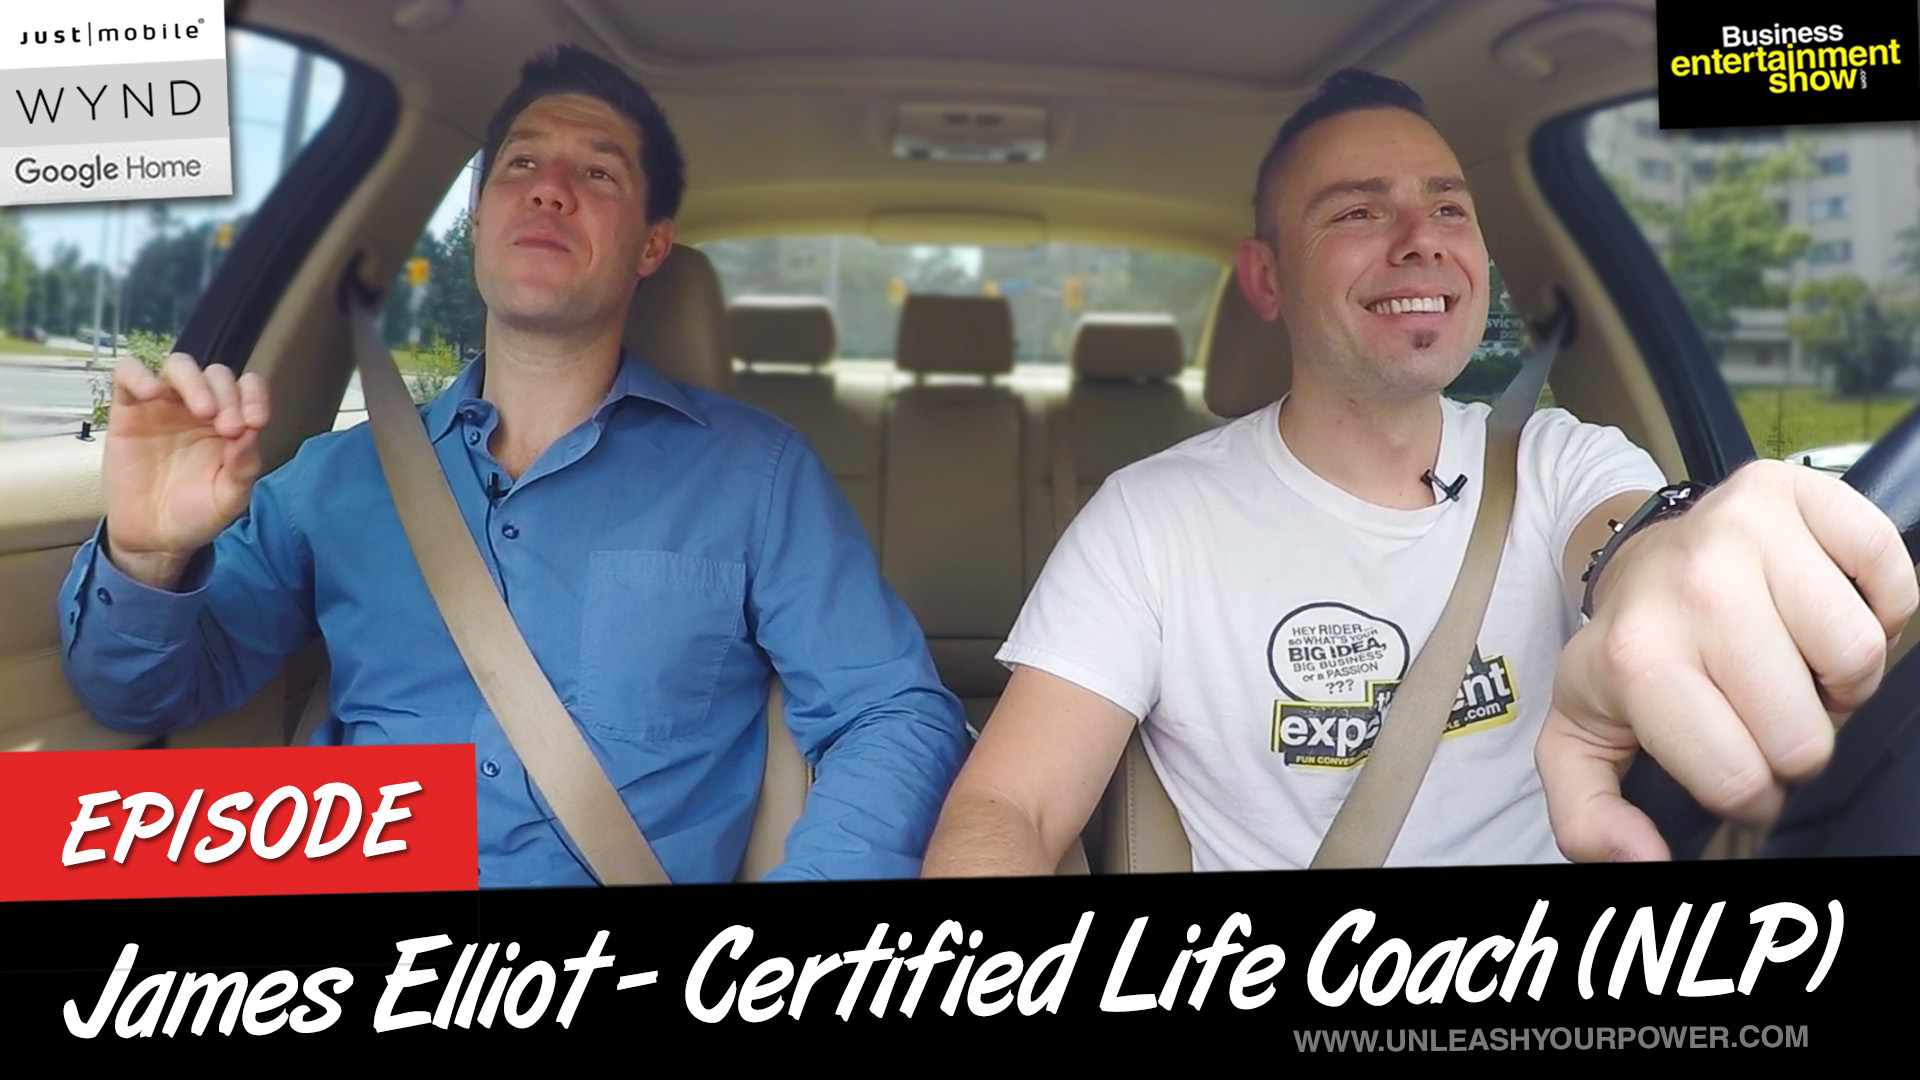 Entrepreneur Interview - Master Coach James Elliot on Business Entertainment Show ( Uber Experiment)